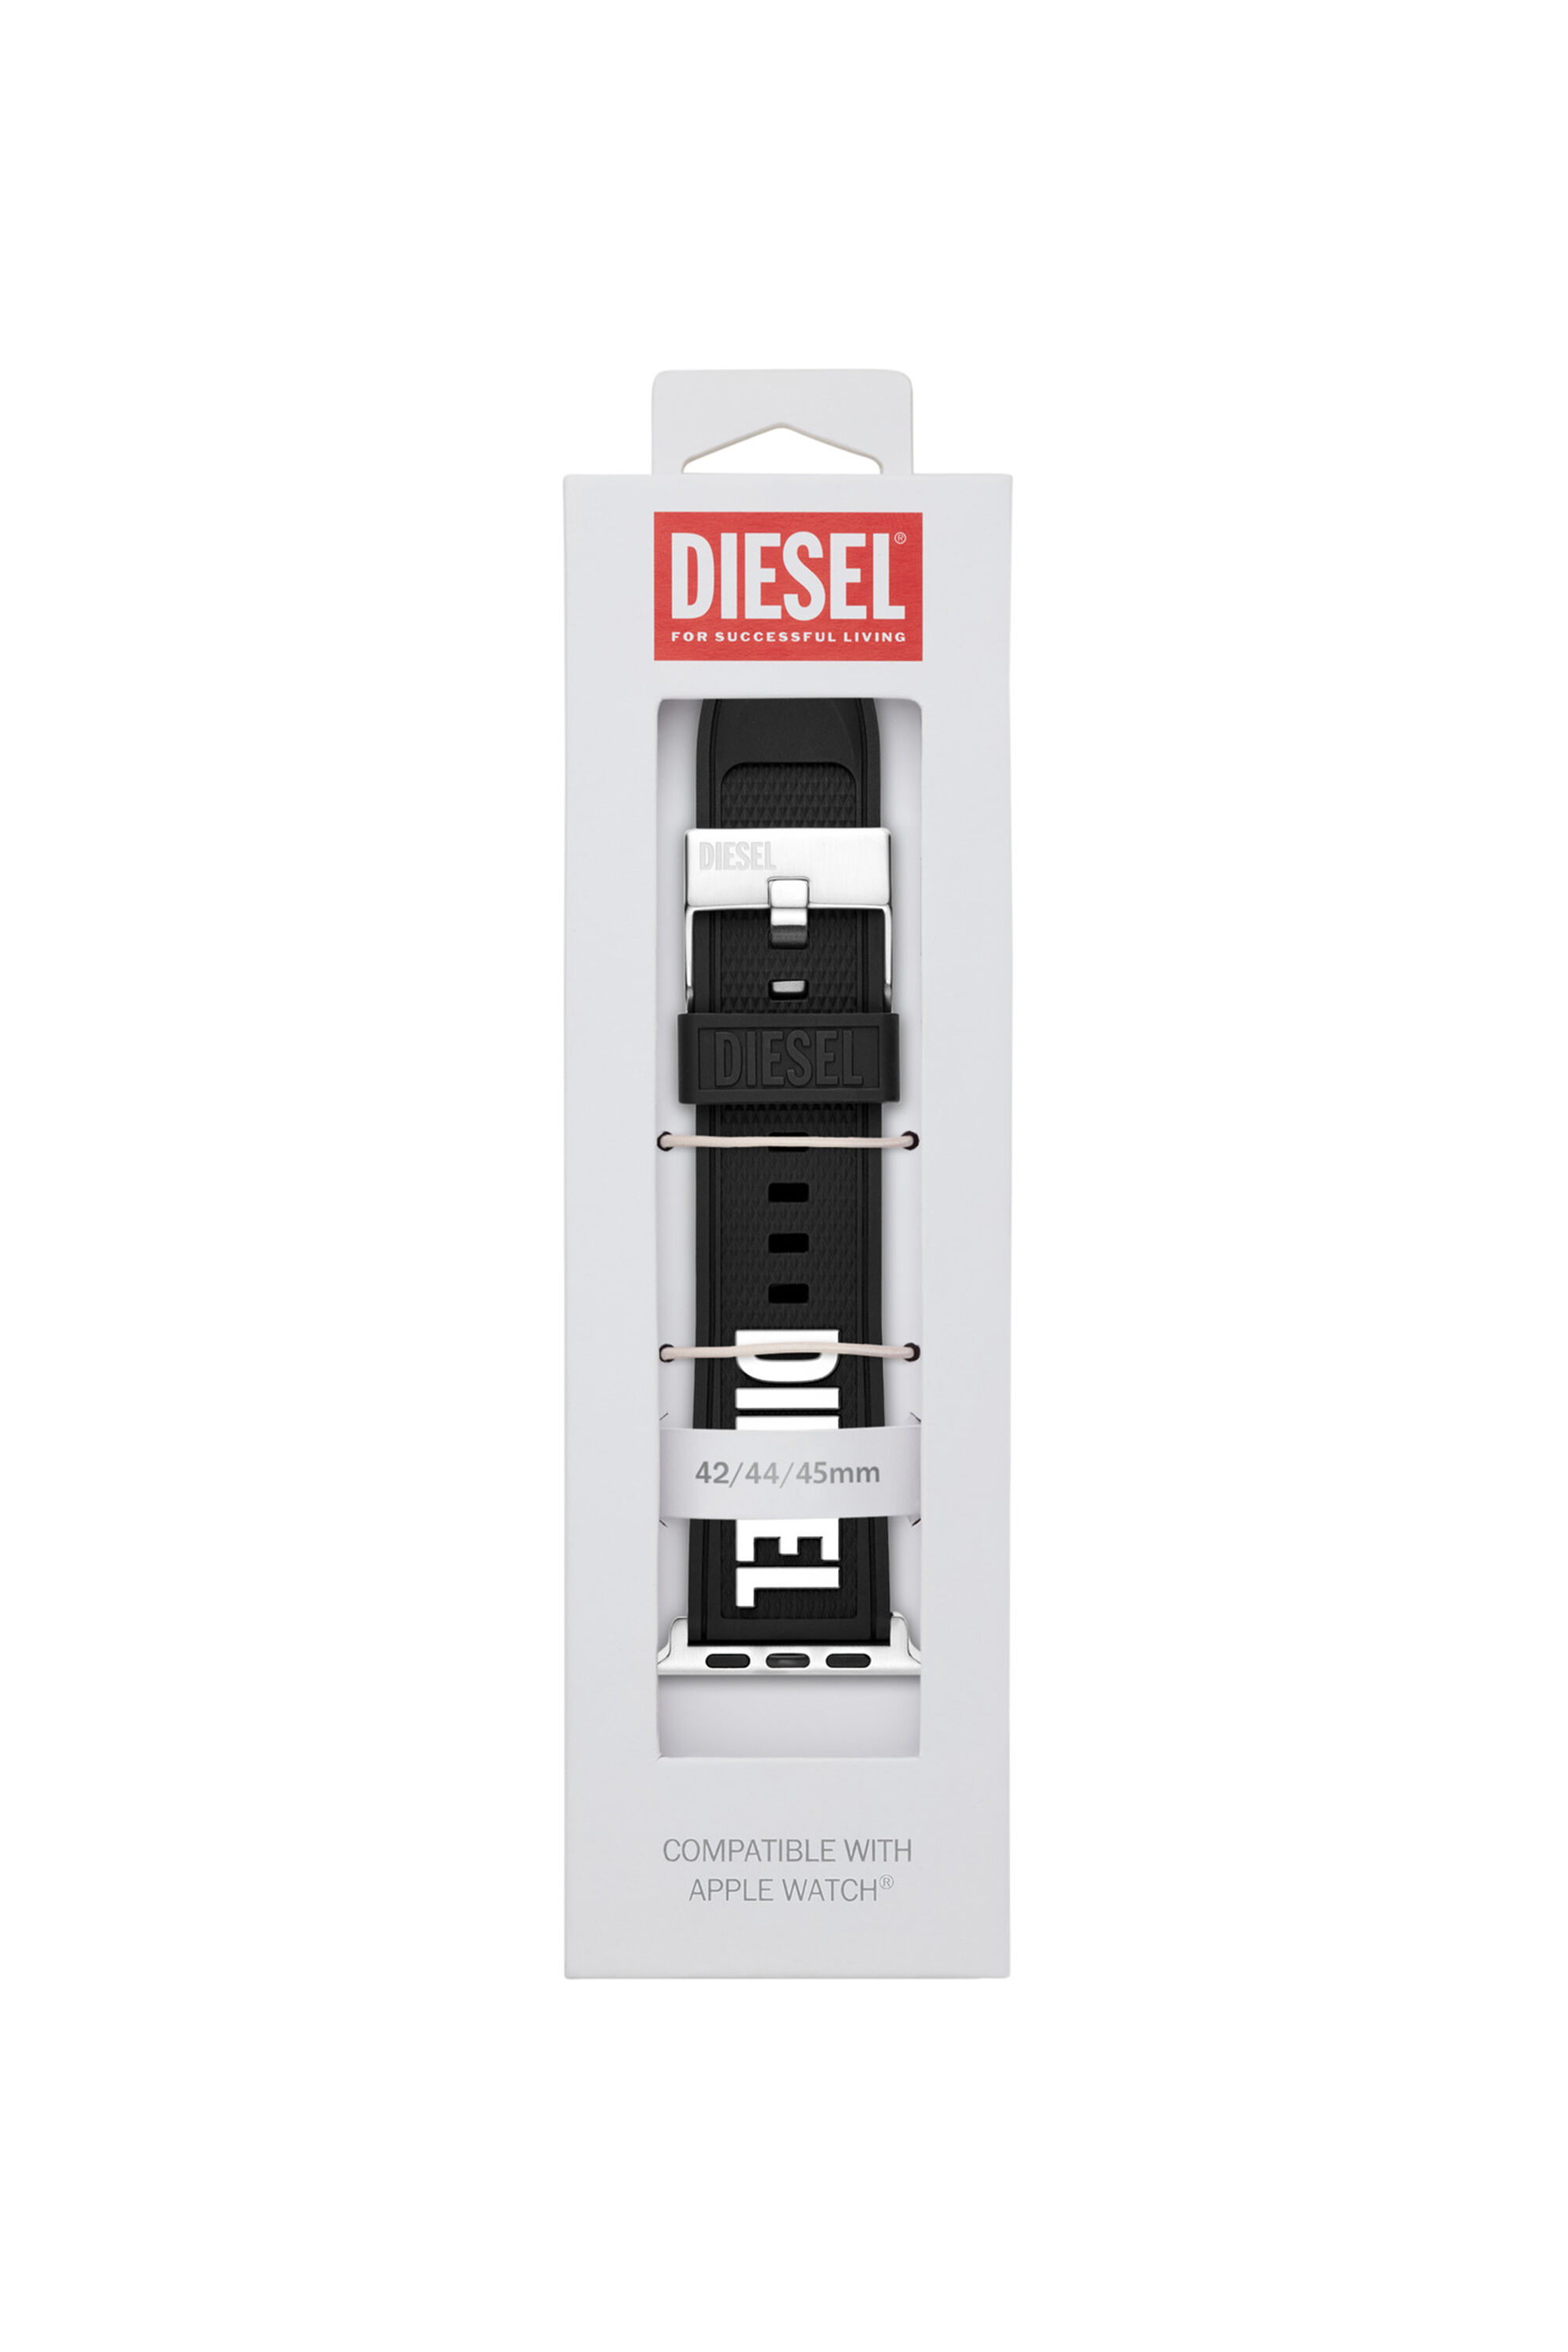 Diesel - DSS011, ブラック - Image 2